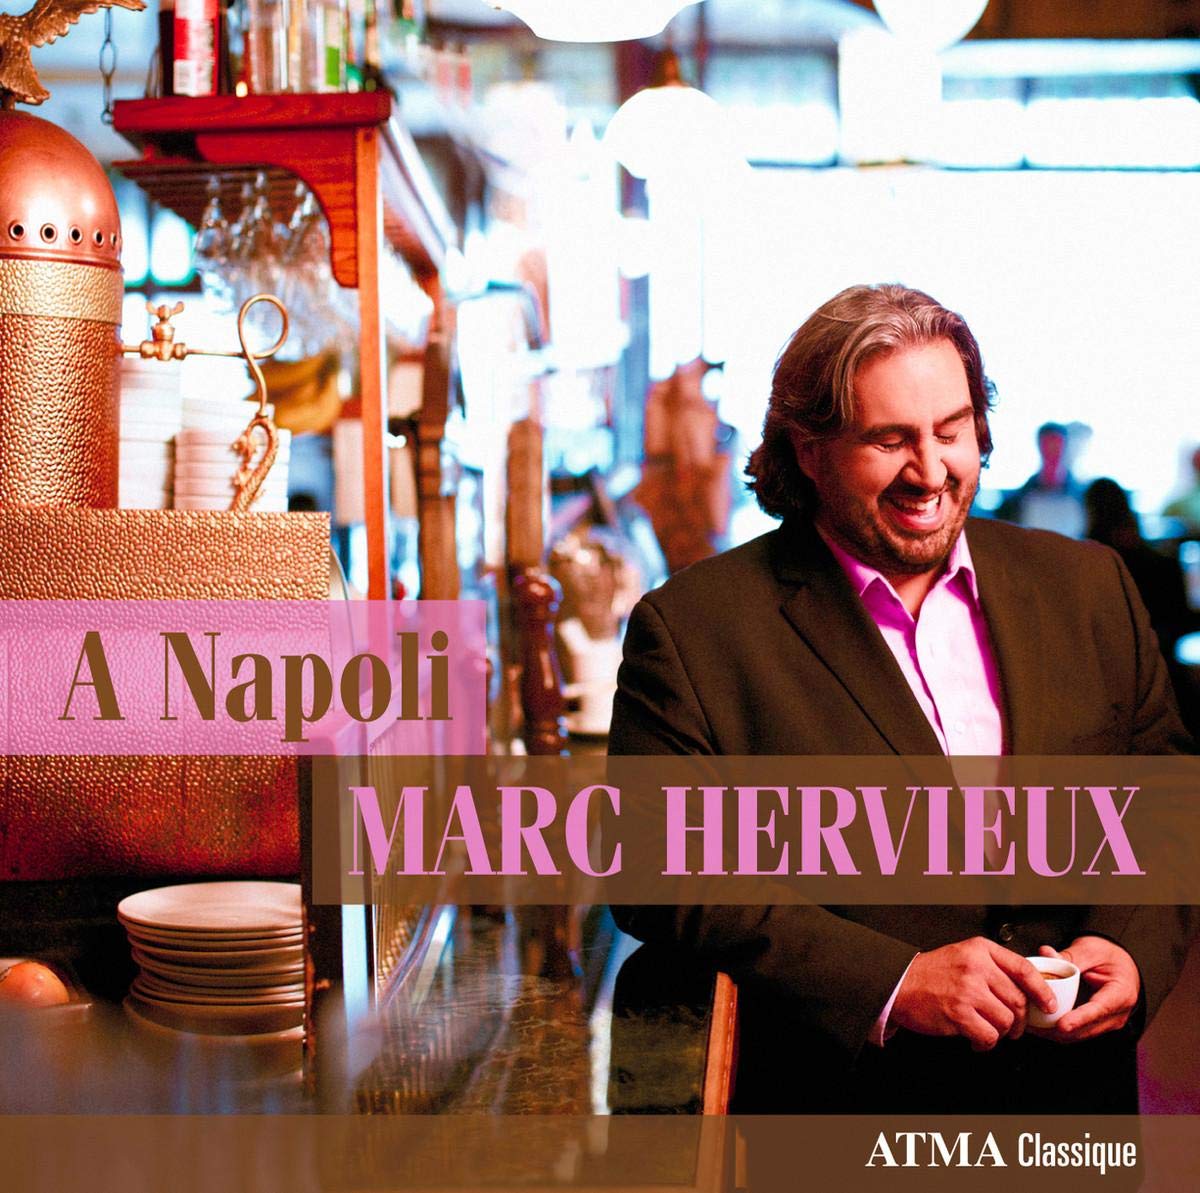 A Napoli - Italian Popular Songs: Marc Hervieux